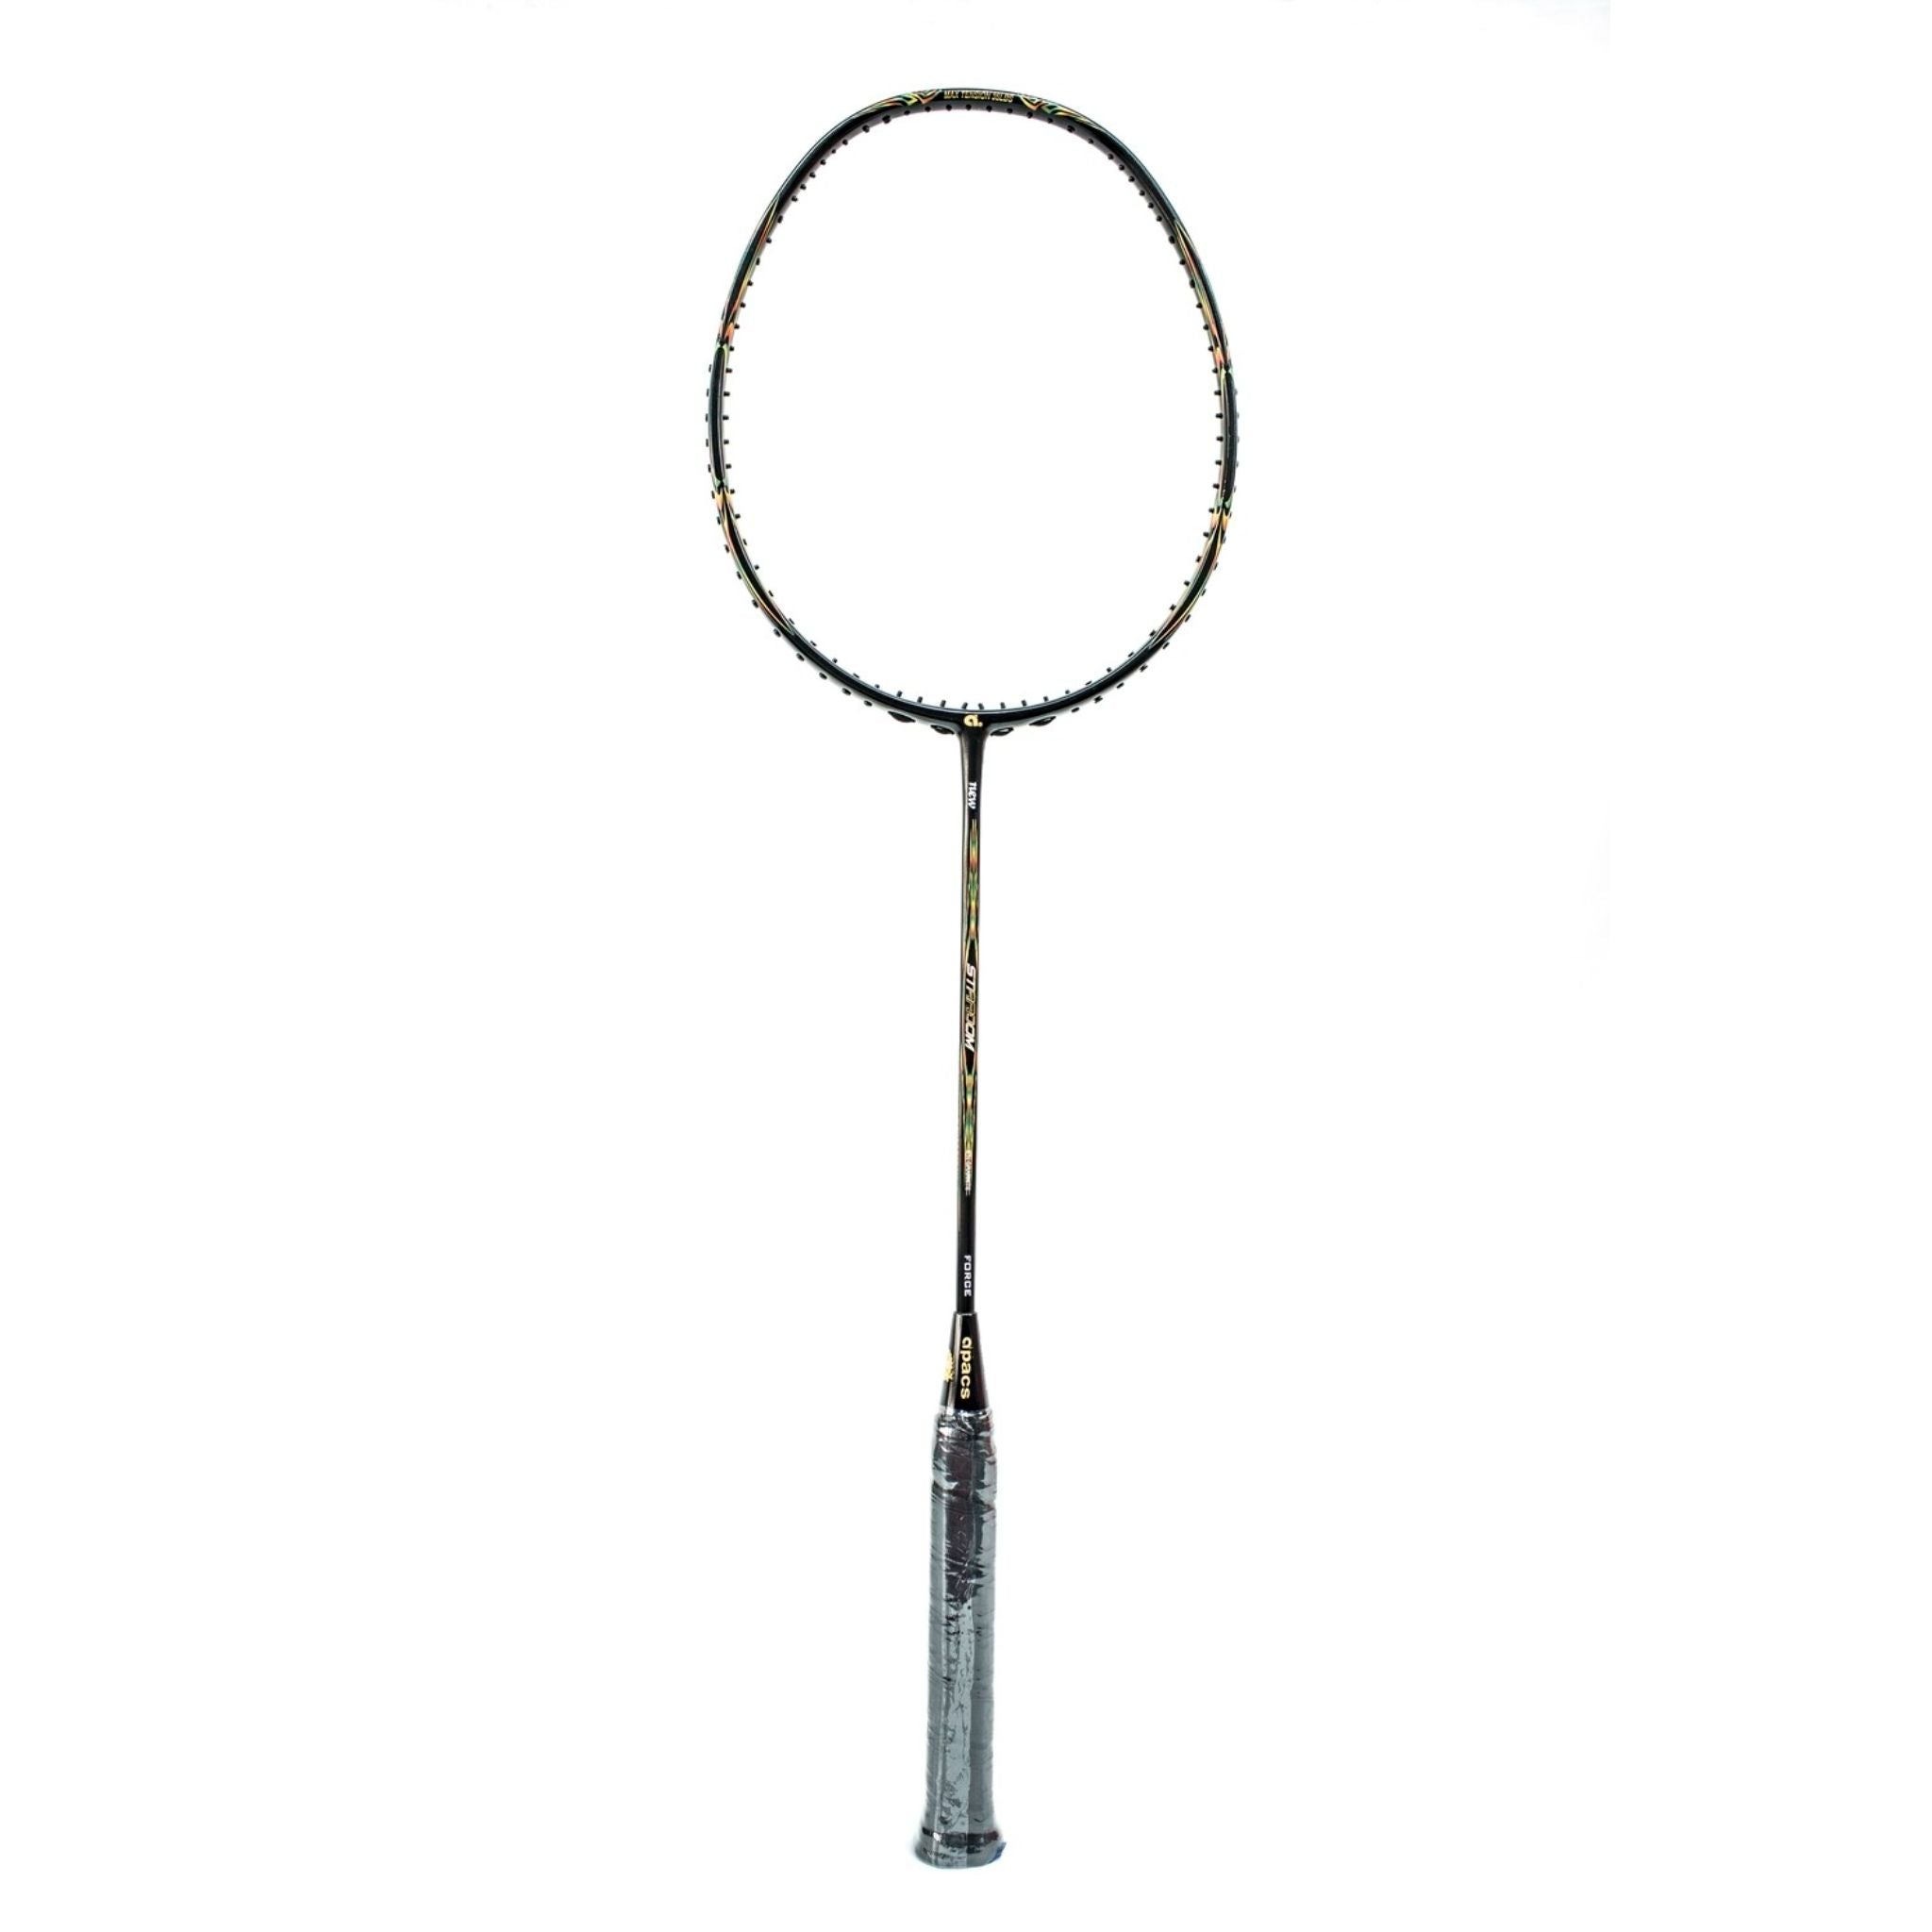 APACS Stardom Force Badminton Racket